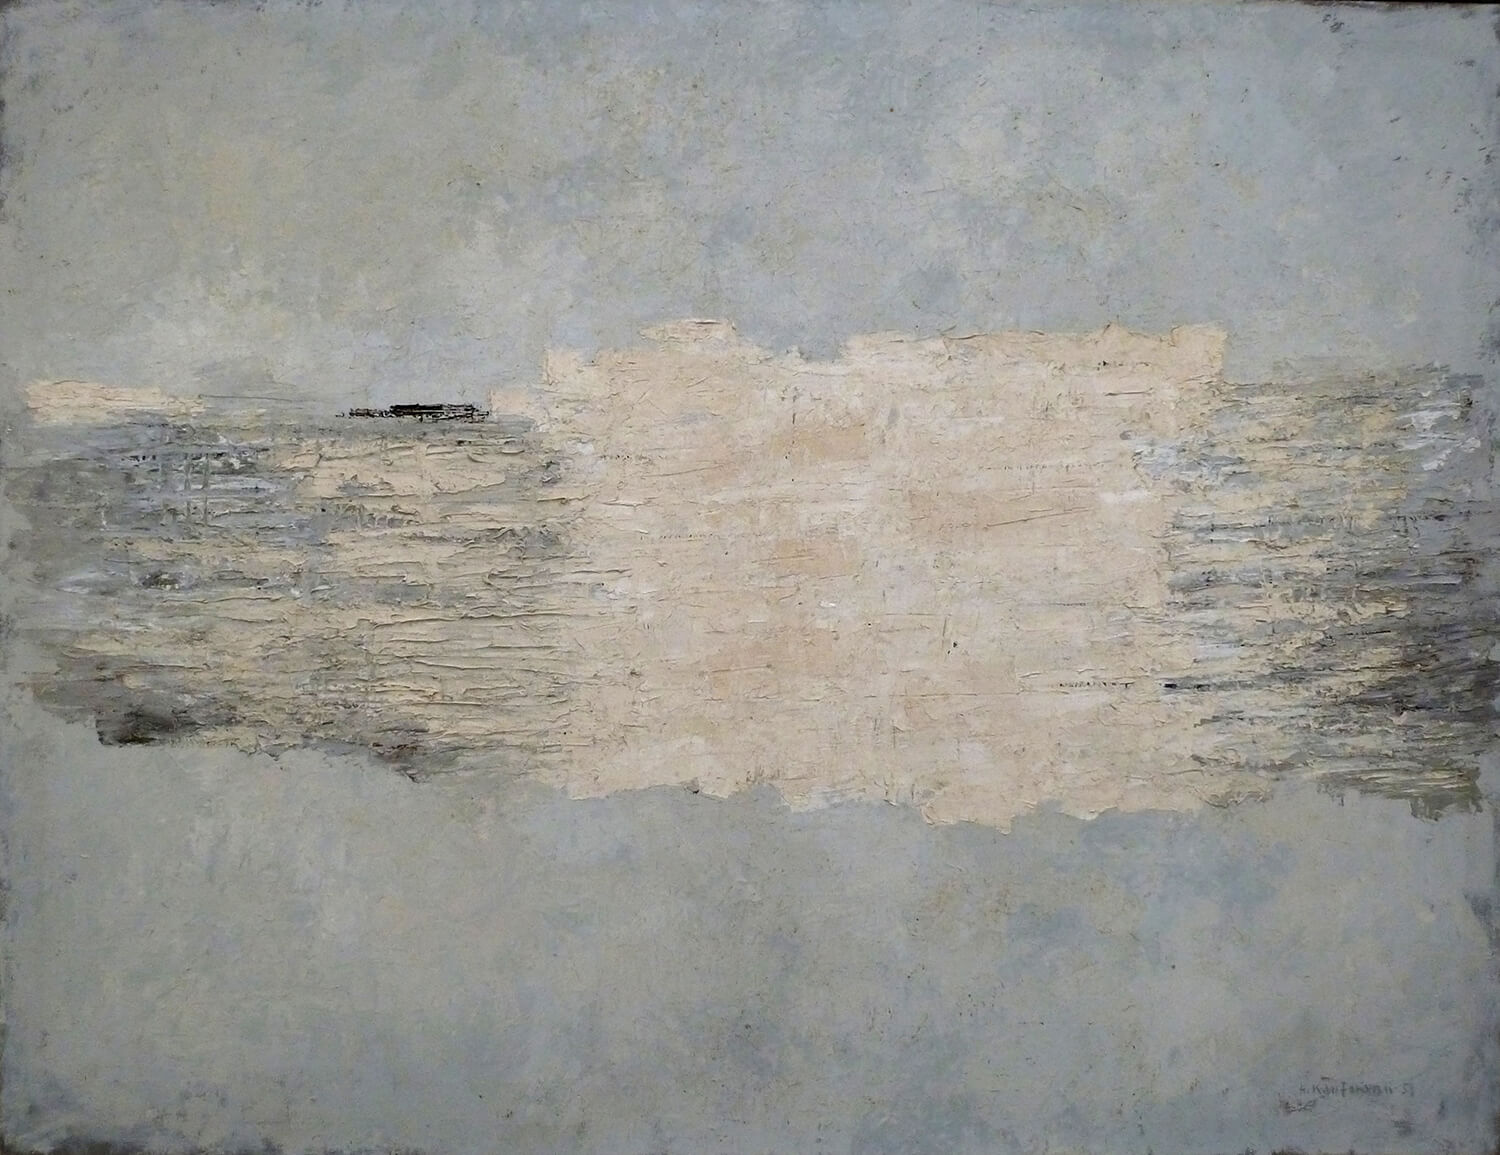 Herbert Kaufmann, Great White, 1959, oil on canvas, 100 x 130 cm